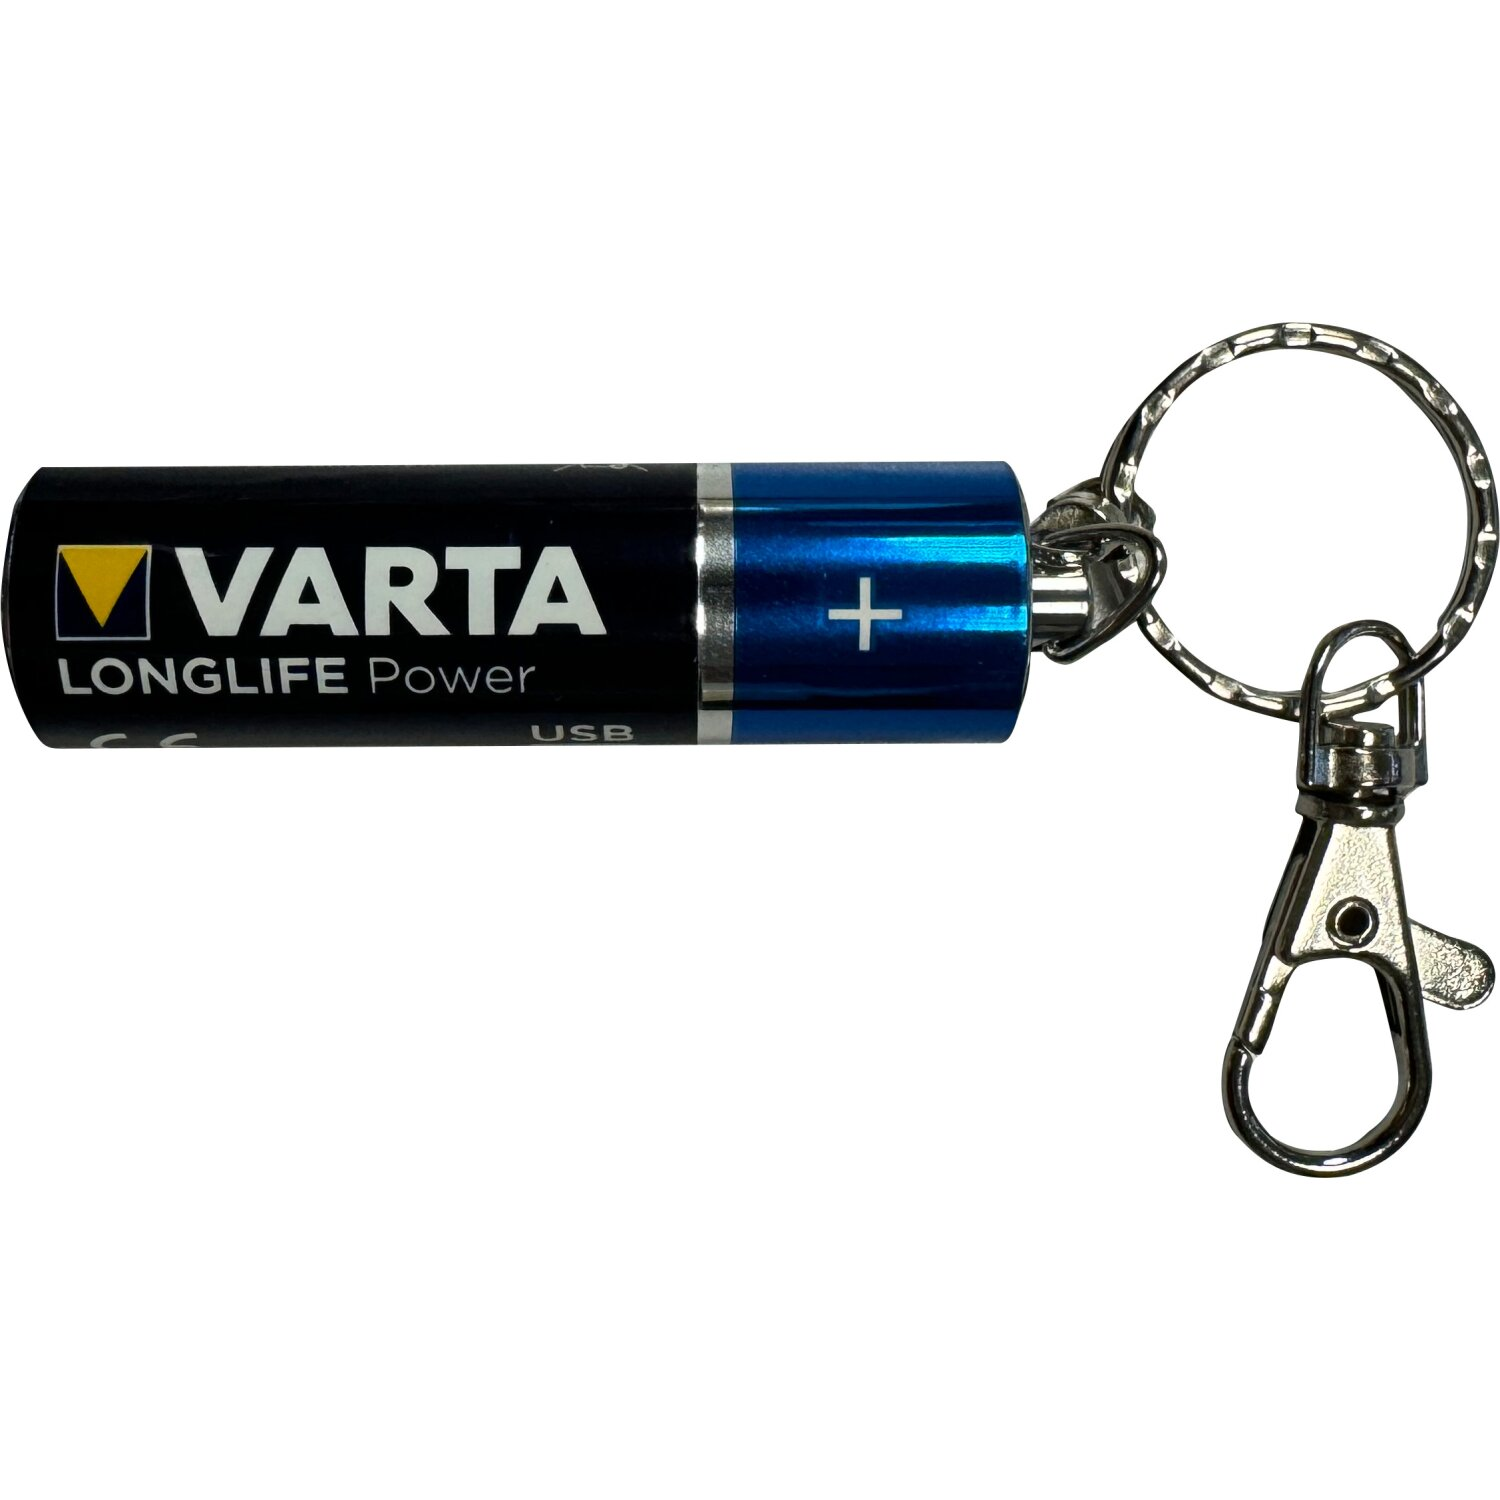 VARTA Bulk Batterie-Design Anhänger USB 4 Stick GB) (Schwarz-Blau